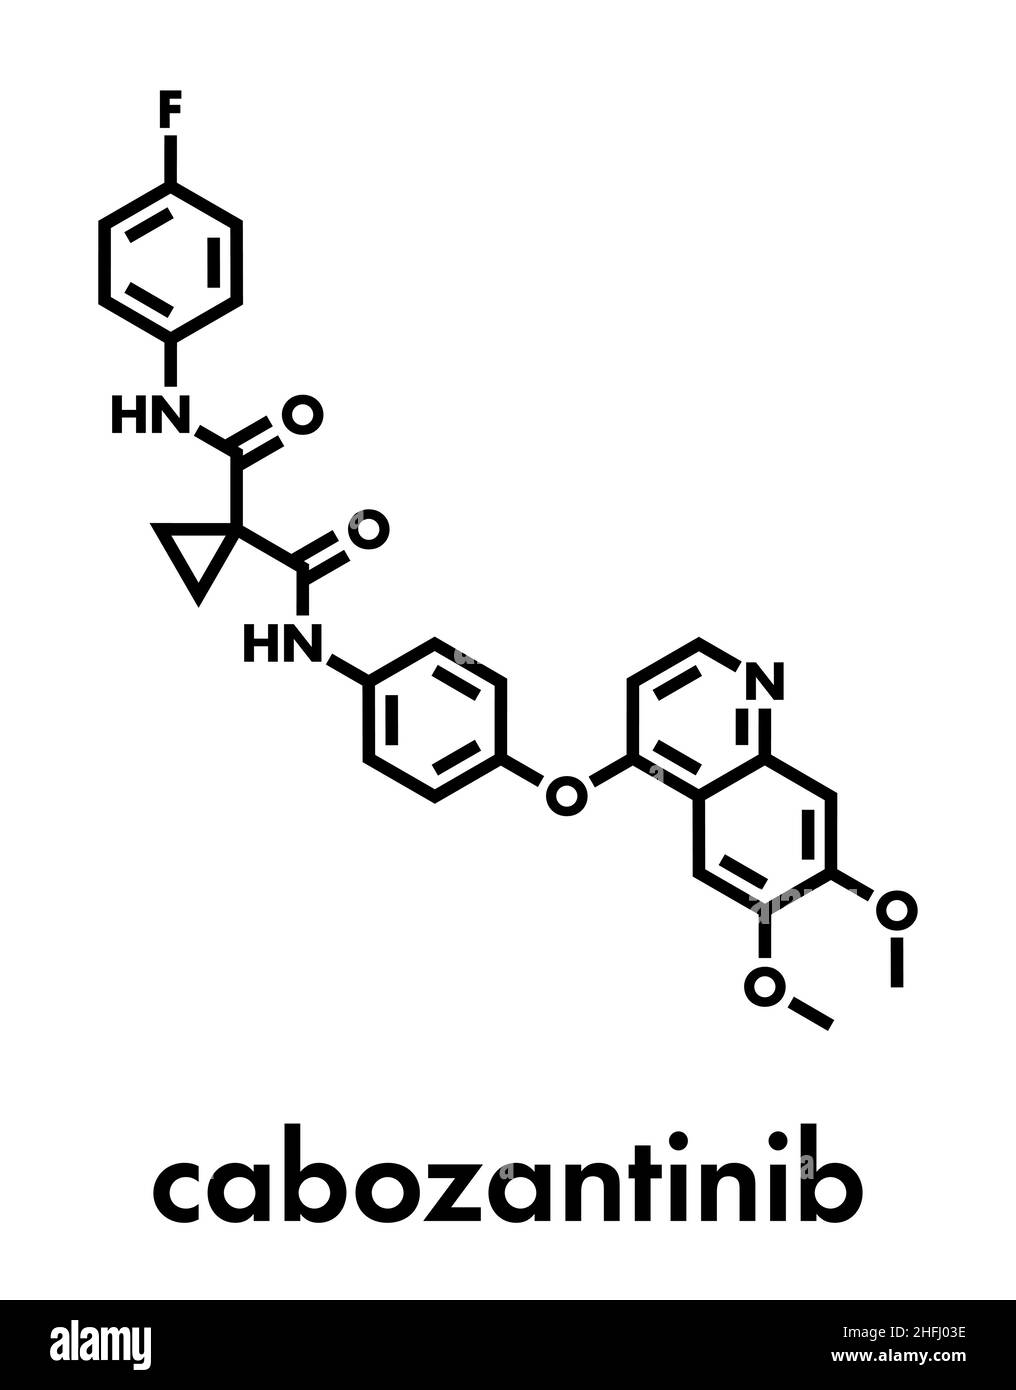 Cabozantinib cancer drug molecule. Inhibitor of c-Met and VEGFR2 tyrosine kinases, used in treatment of medullary thyroid cancer. Skeletal formula. Stock Vector